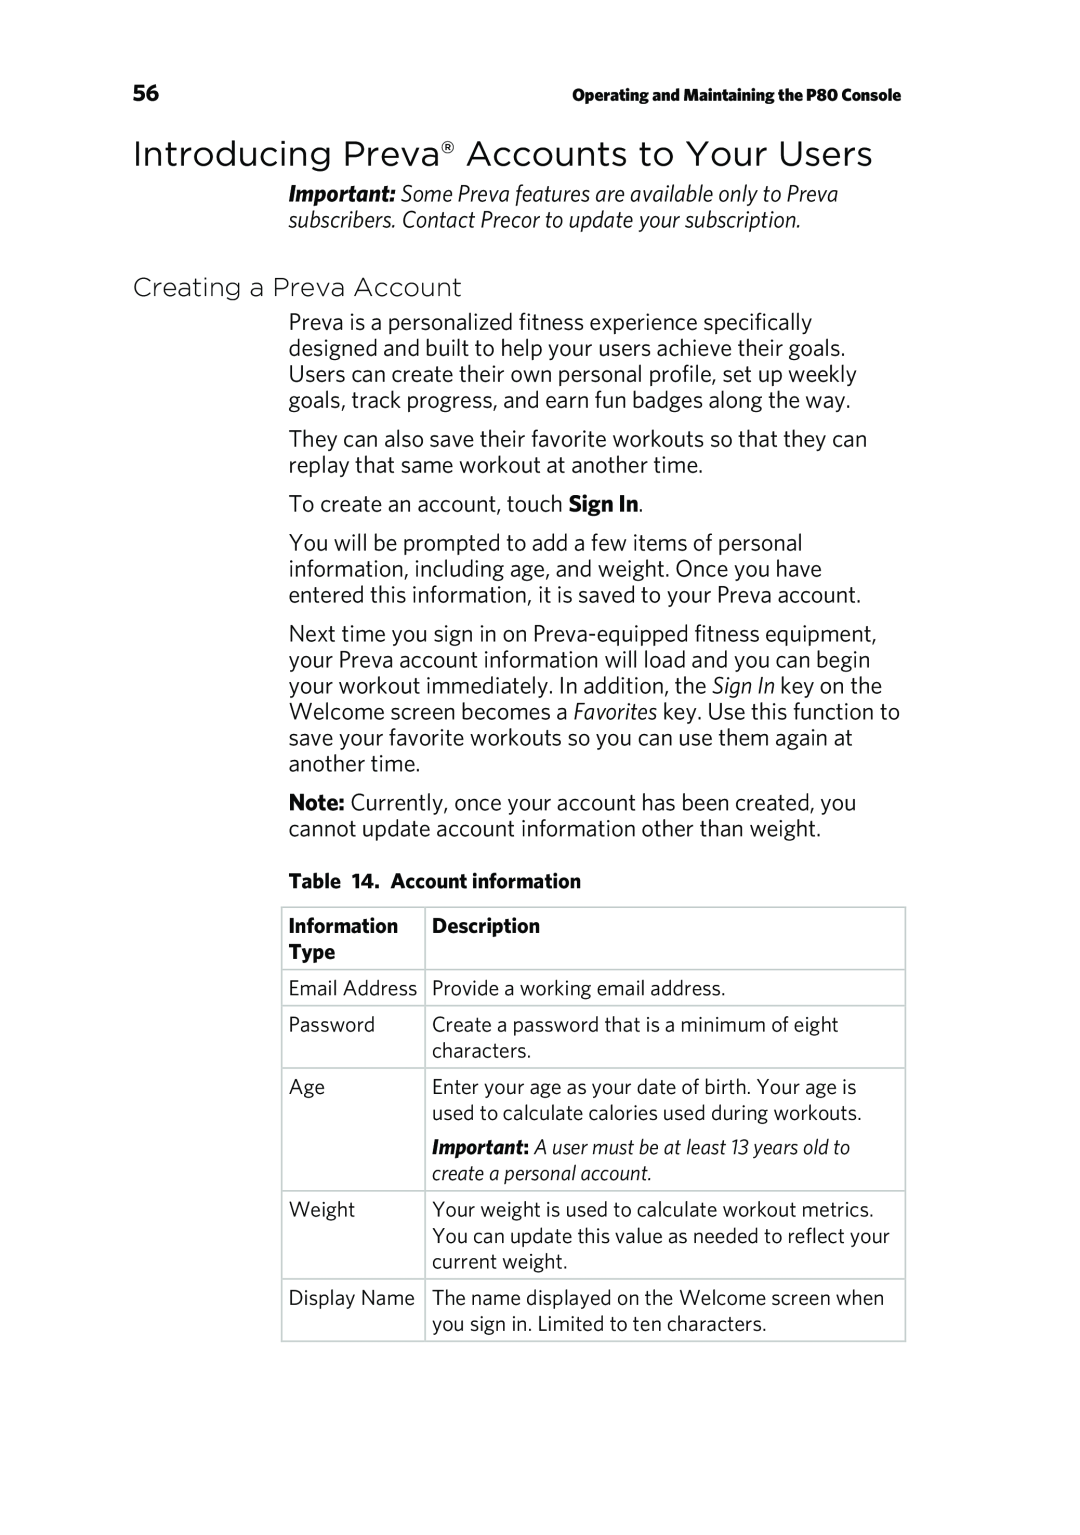 Precor P80 manual Introducing Preva Accounts to Your Users, Creating a Preva Account 